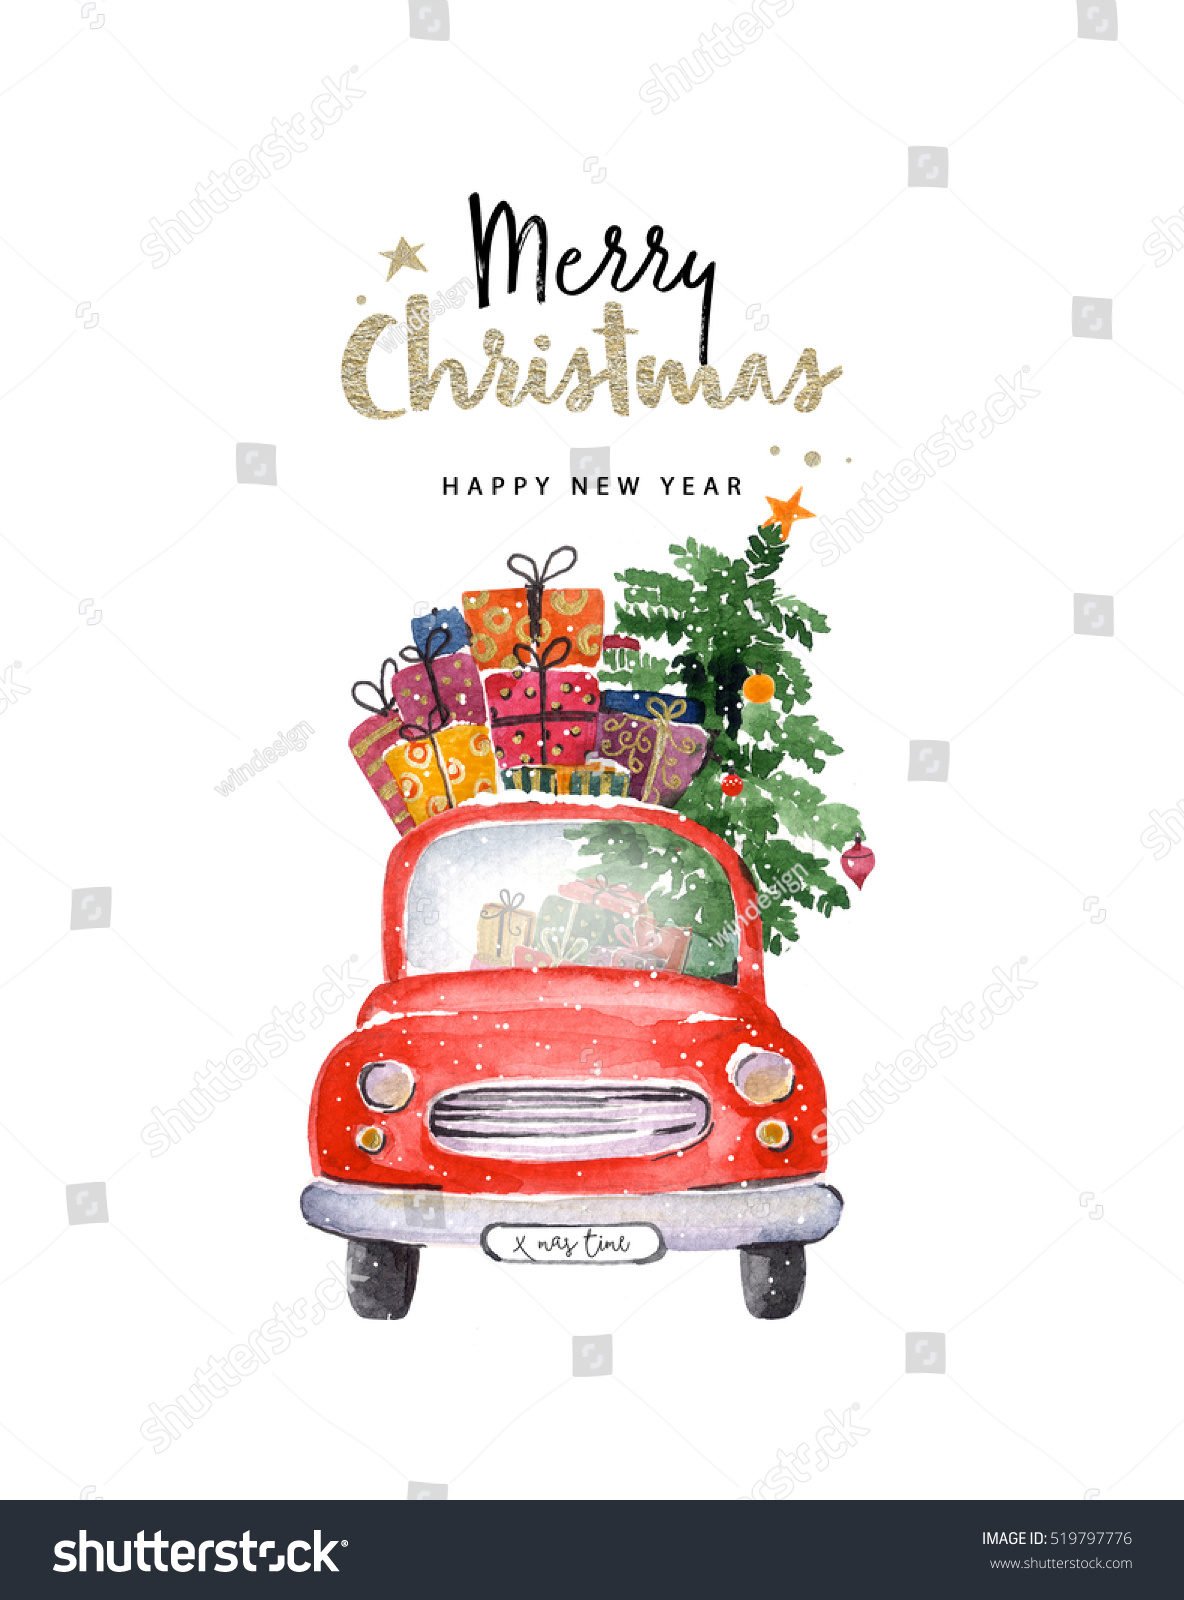 Merry Christmas Happy New Year Illustration Stock Illustration 519797776 - Shutterstock